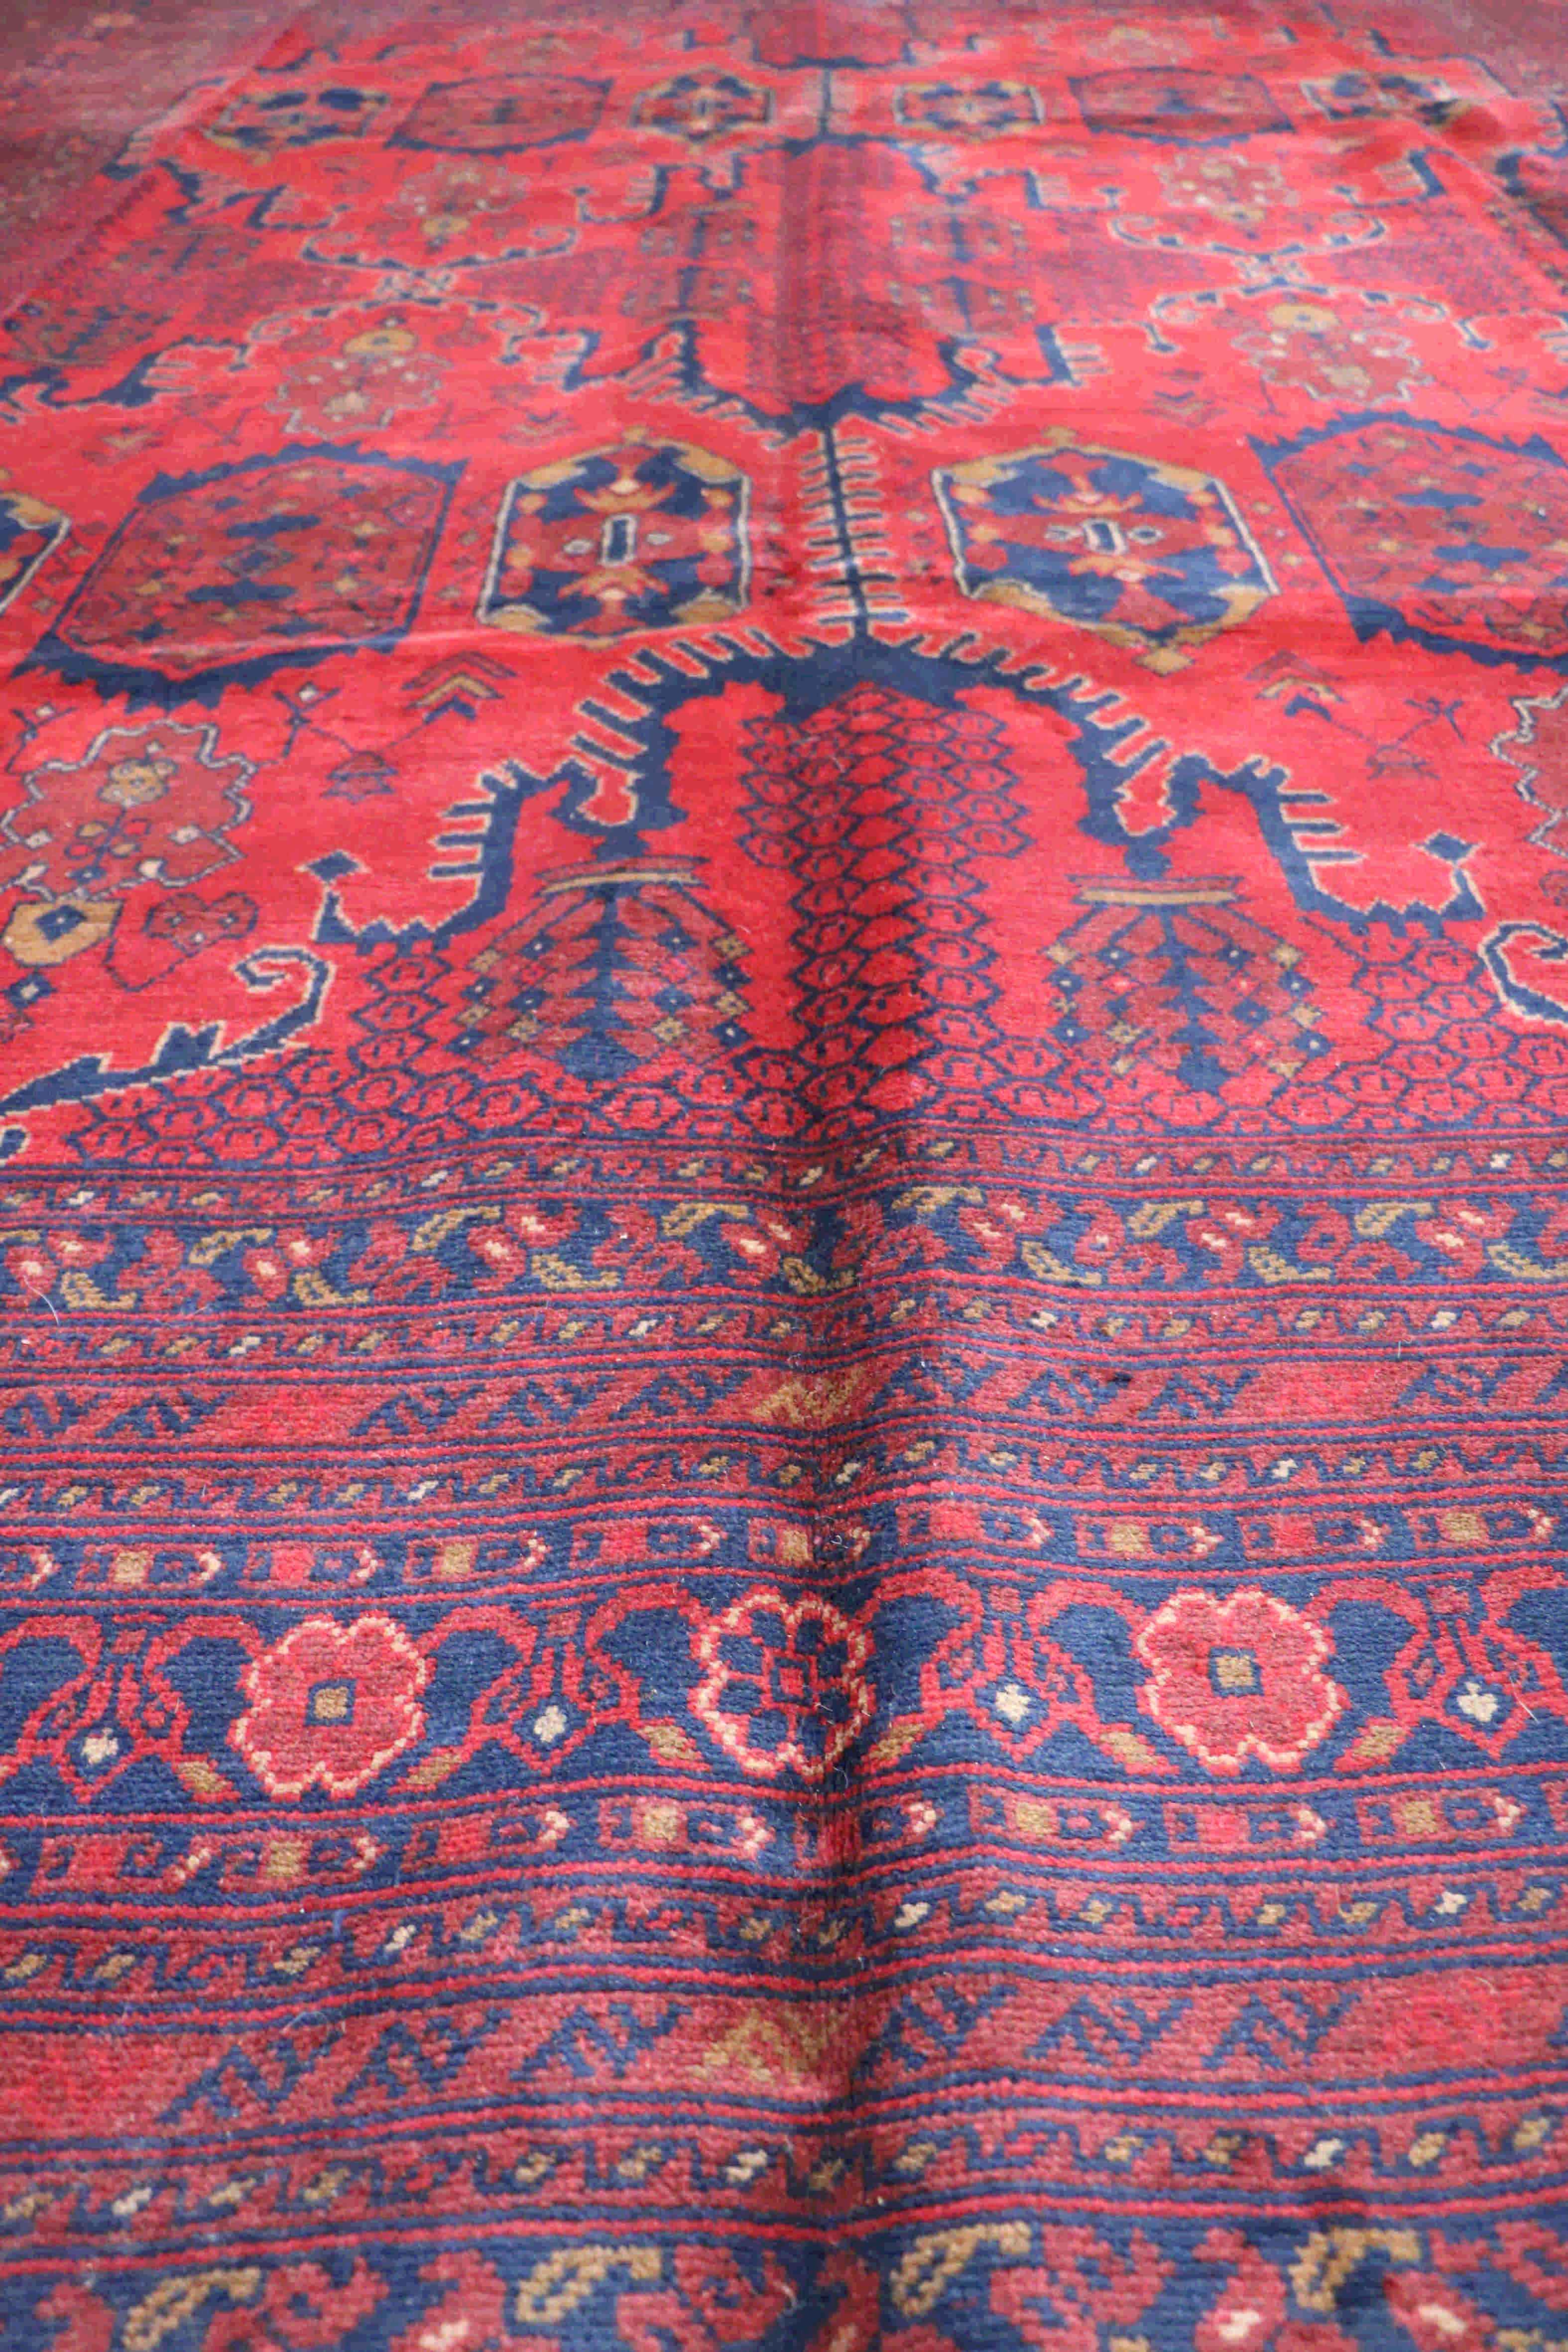 Lush and soft afghan khan rug with deep reds